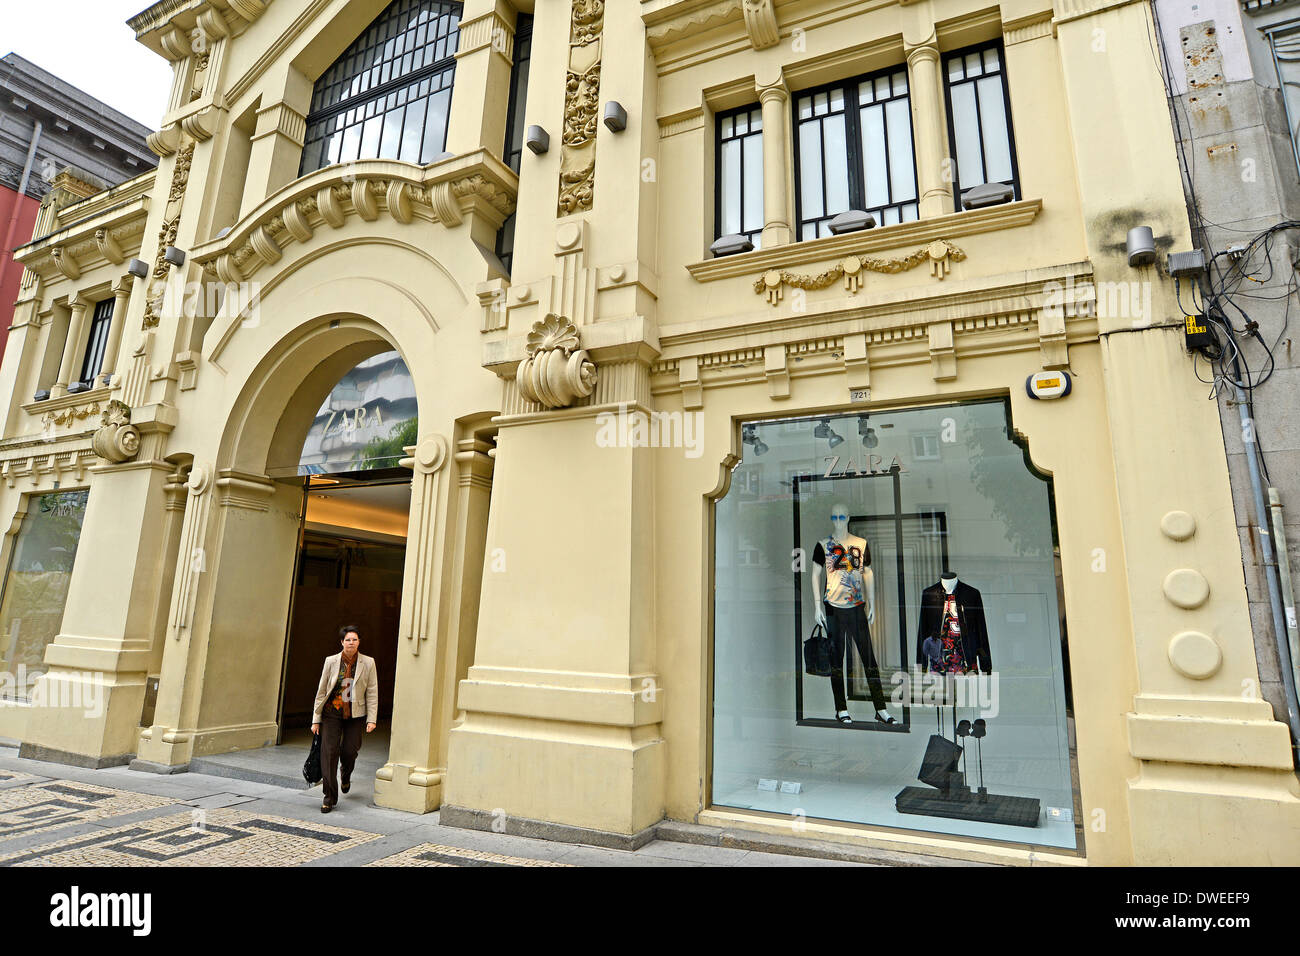 Zara boutique Braga Portugal Stock Photo - Alamy